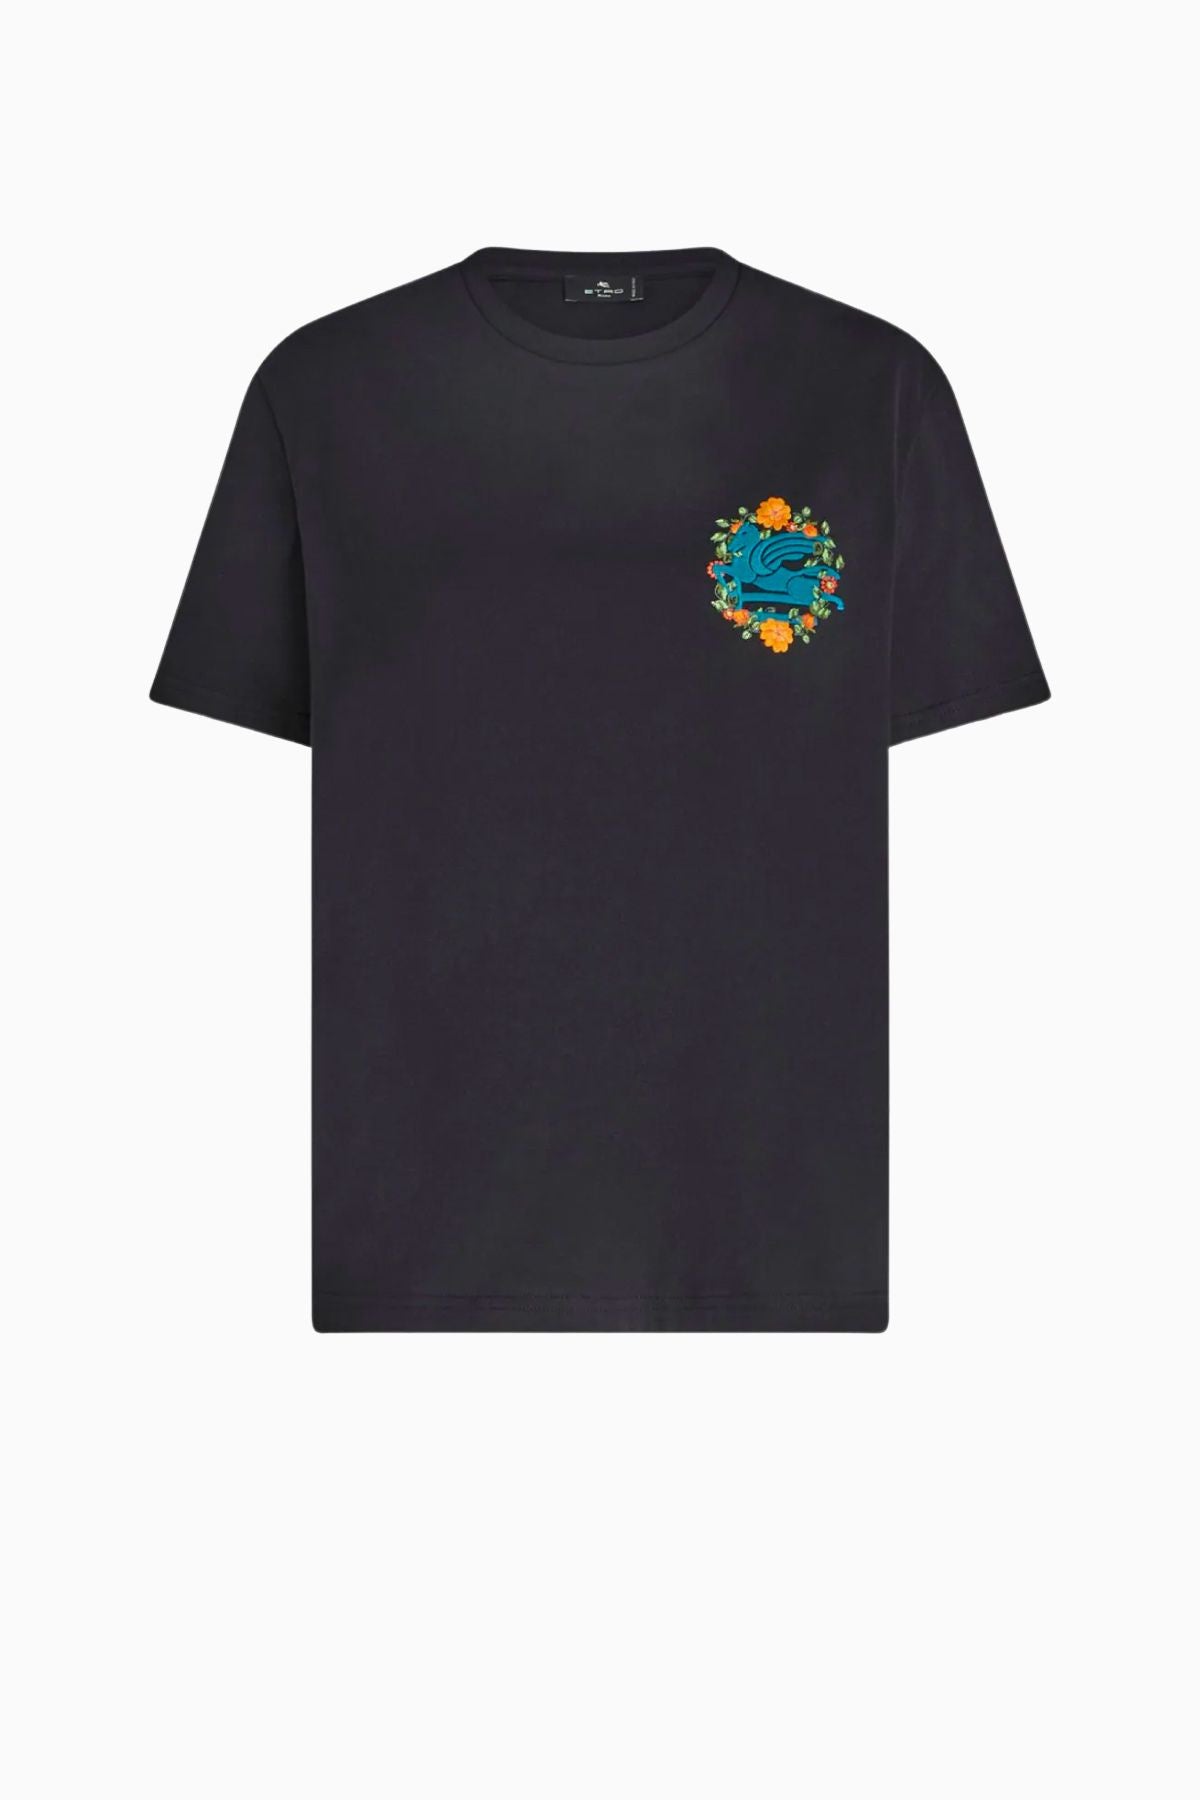 Etro Logo Embroidery T-Shirt - Black